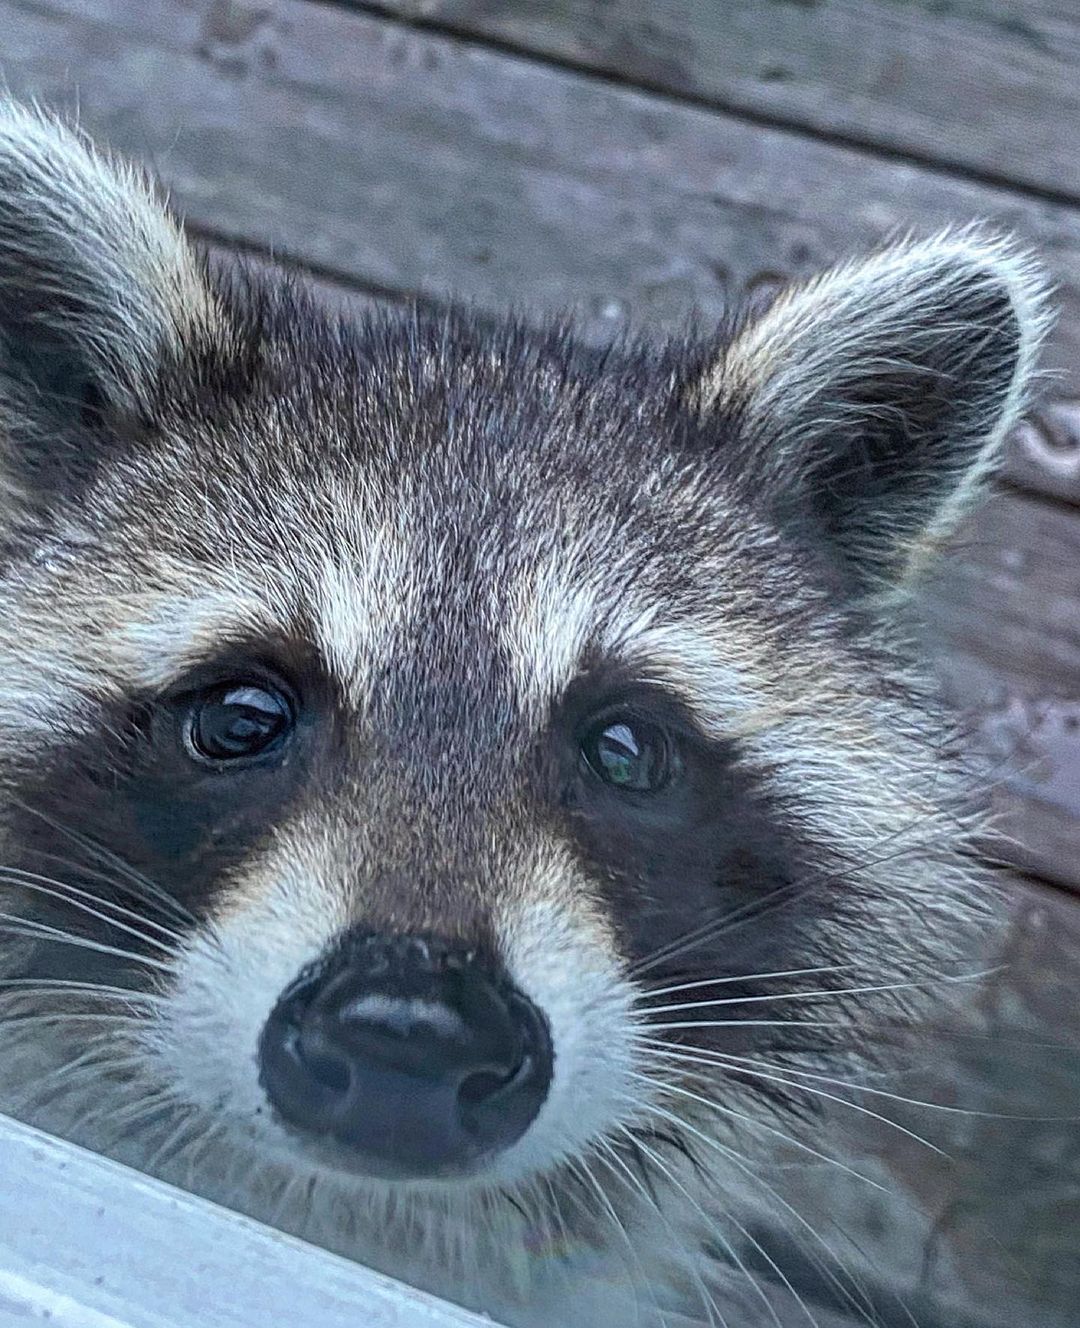 Raccoon staring through the window.